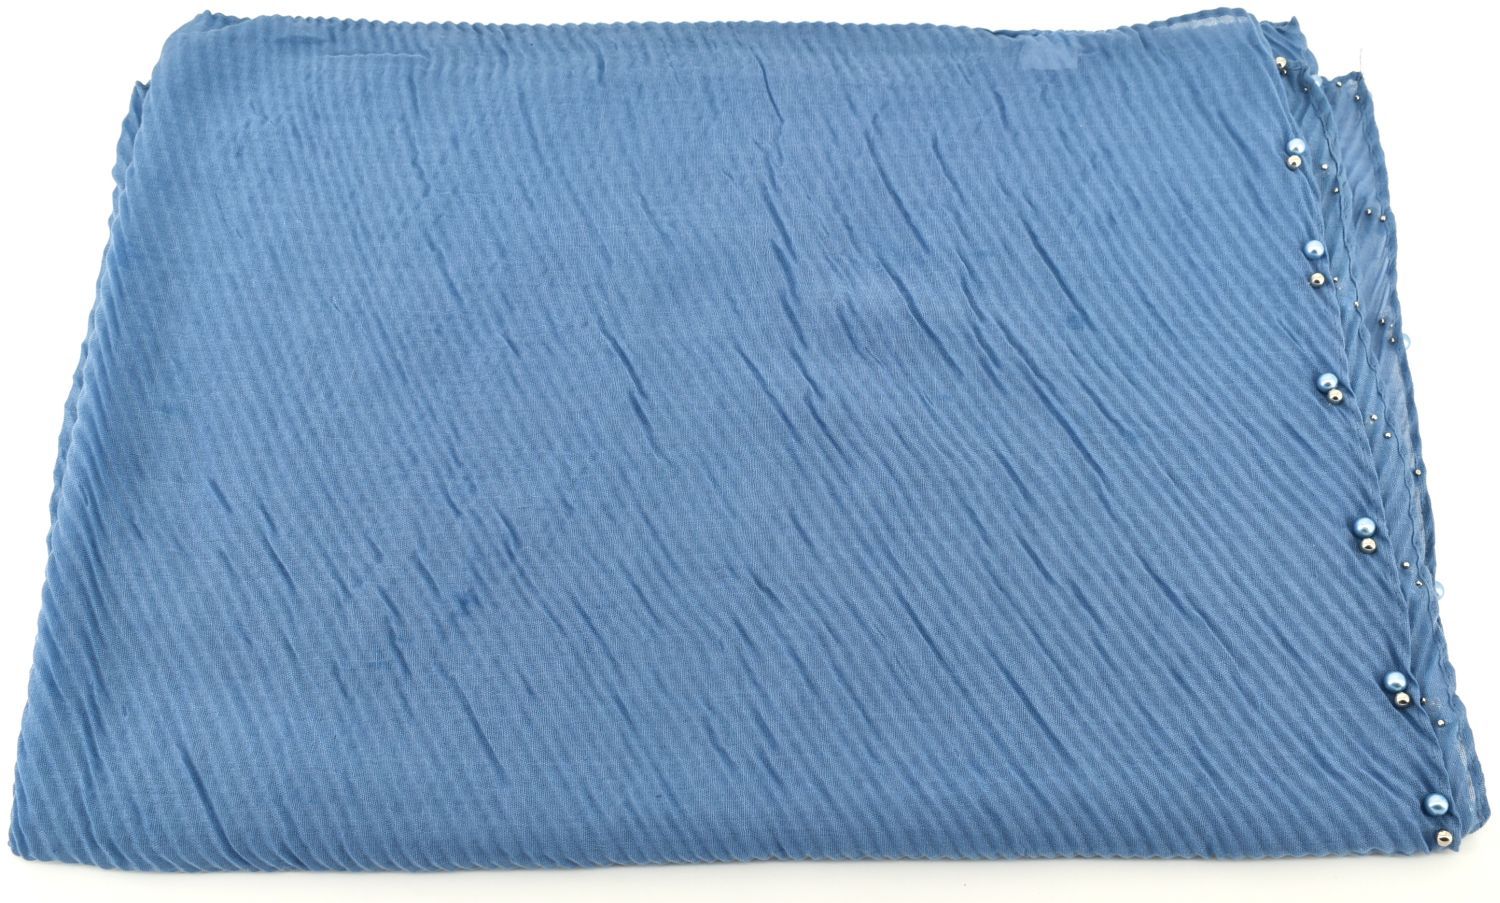 Dámský šátek s perličkami Arteddy  - modrá